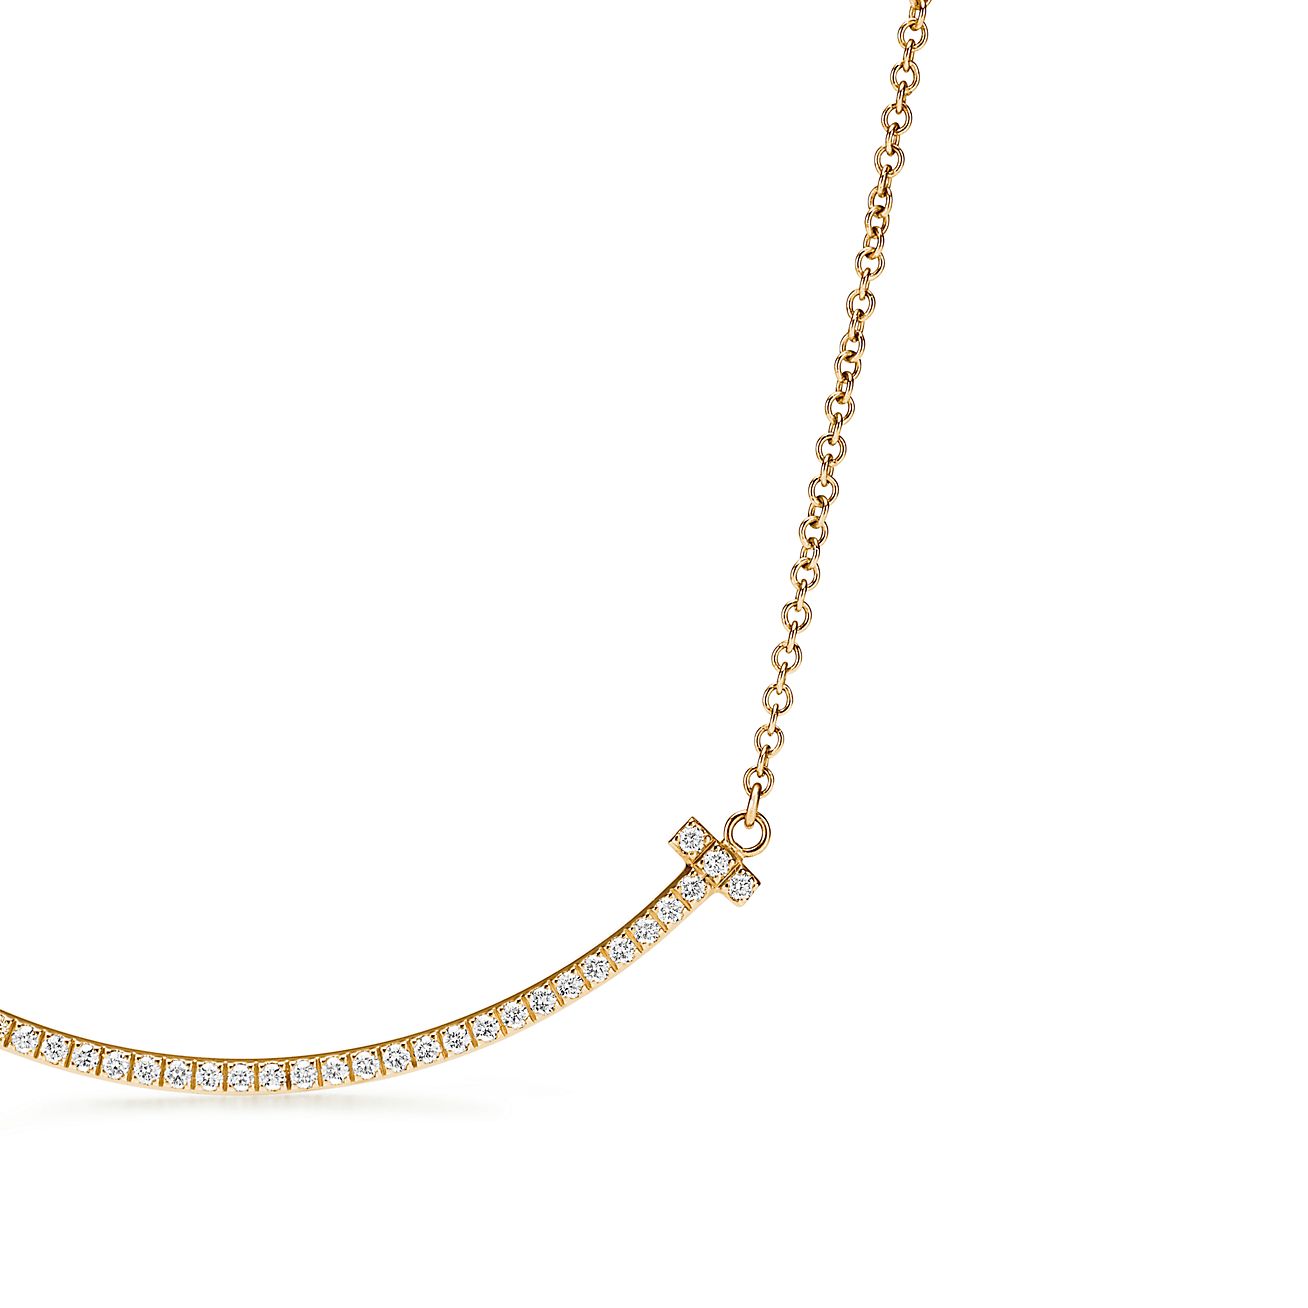 Tiffany T Necklaces & Pendants with Onyx | Tiffany & Co.